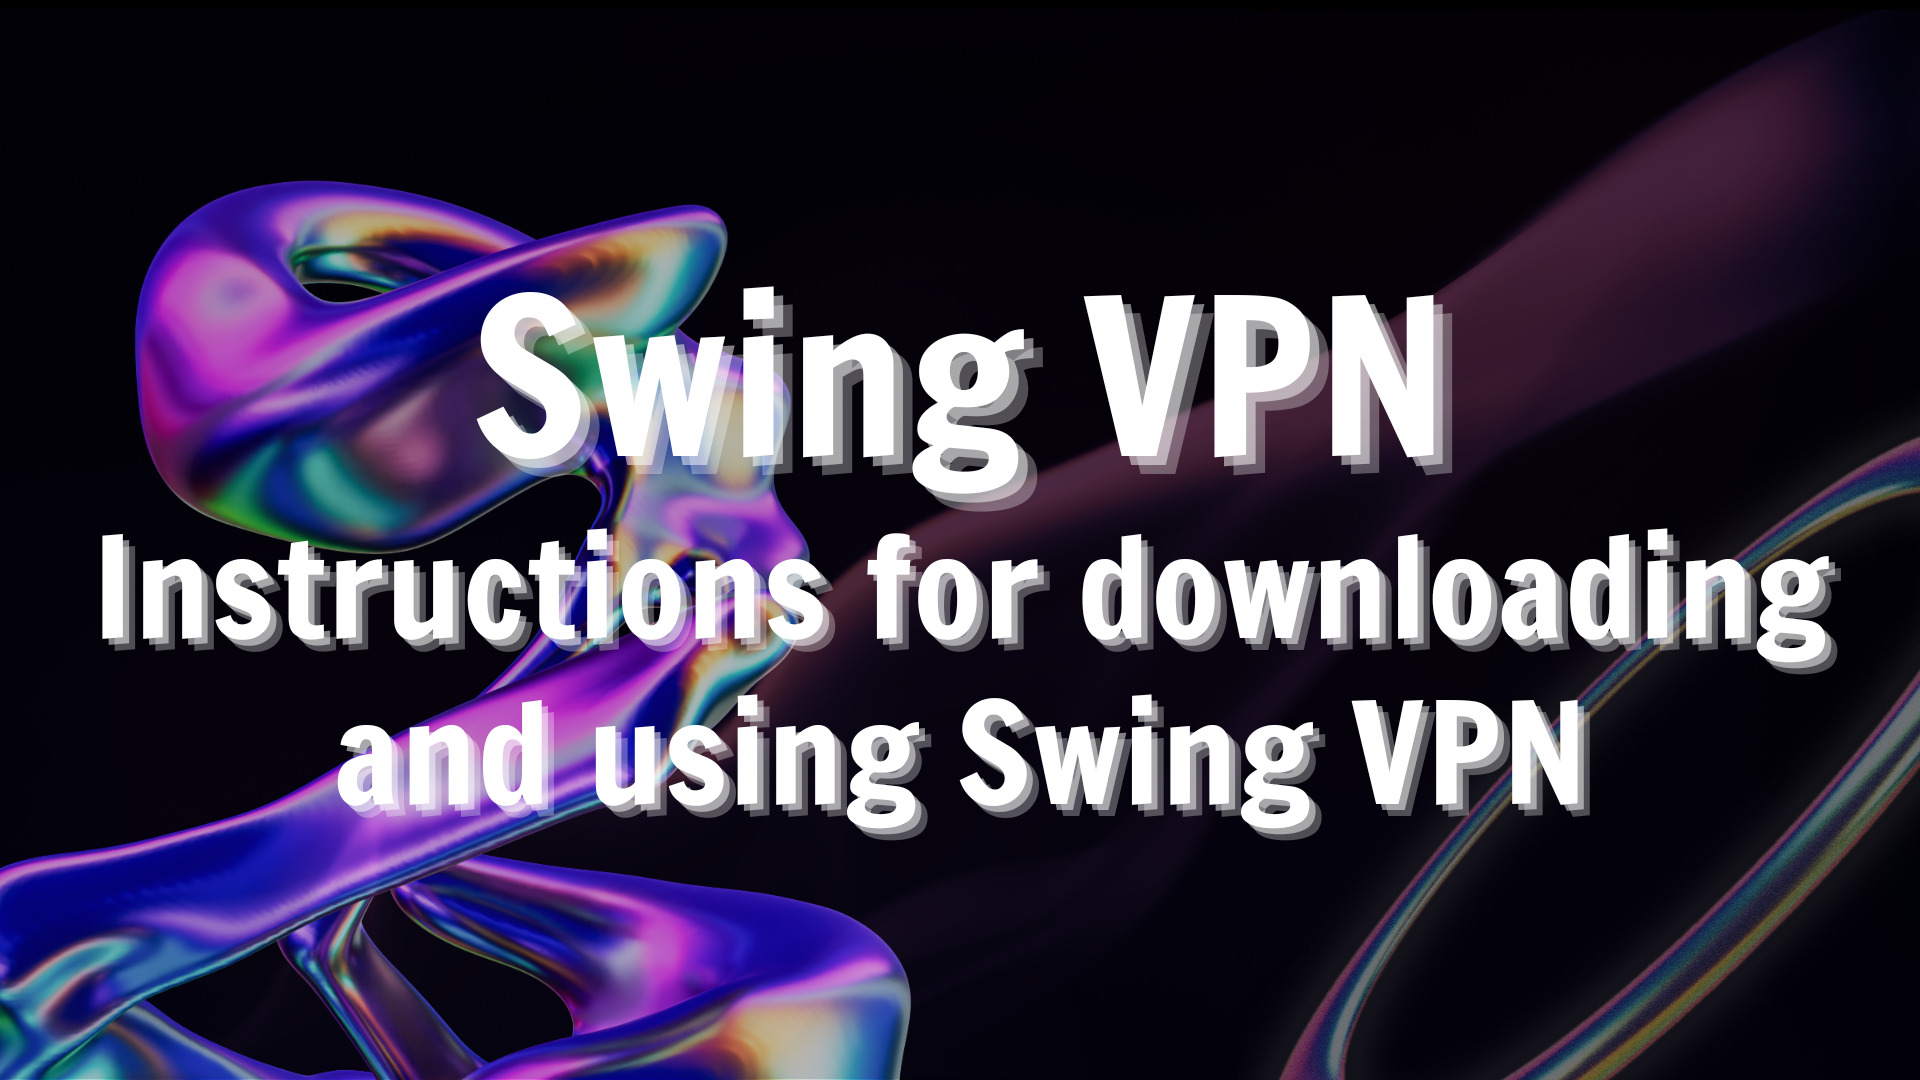 Swing VPN: Instructions for downloading and using Swing VPN